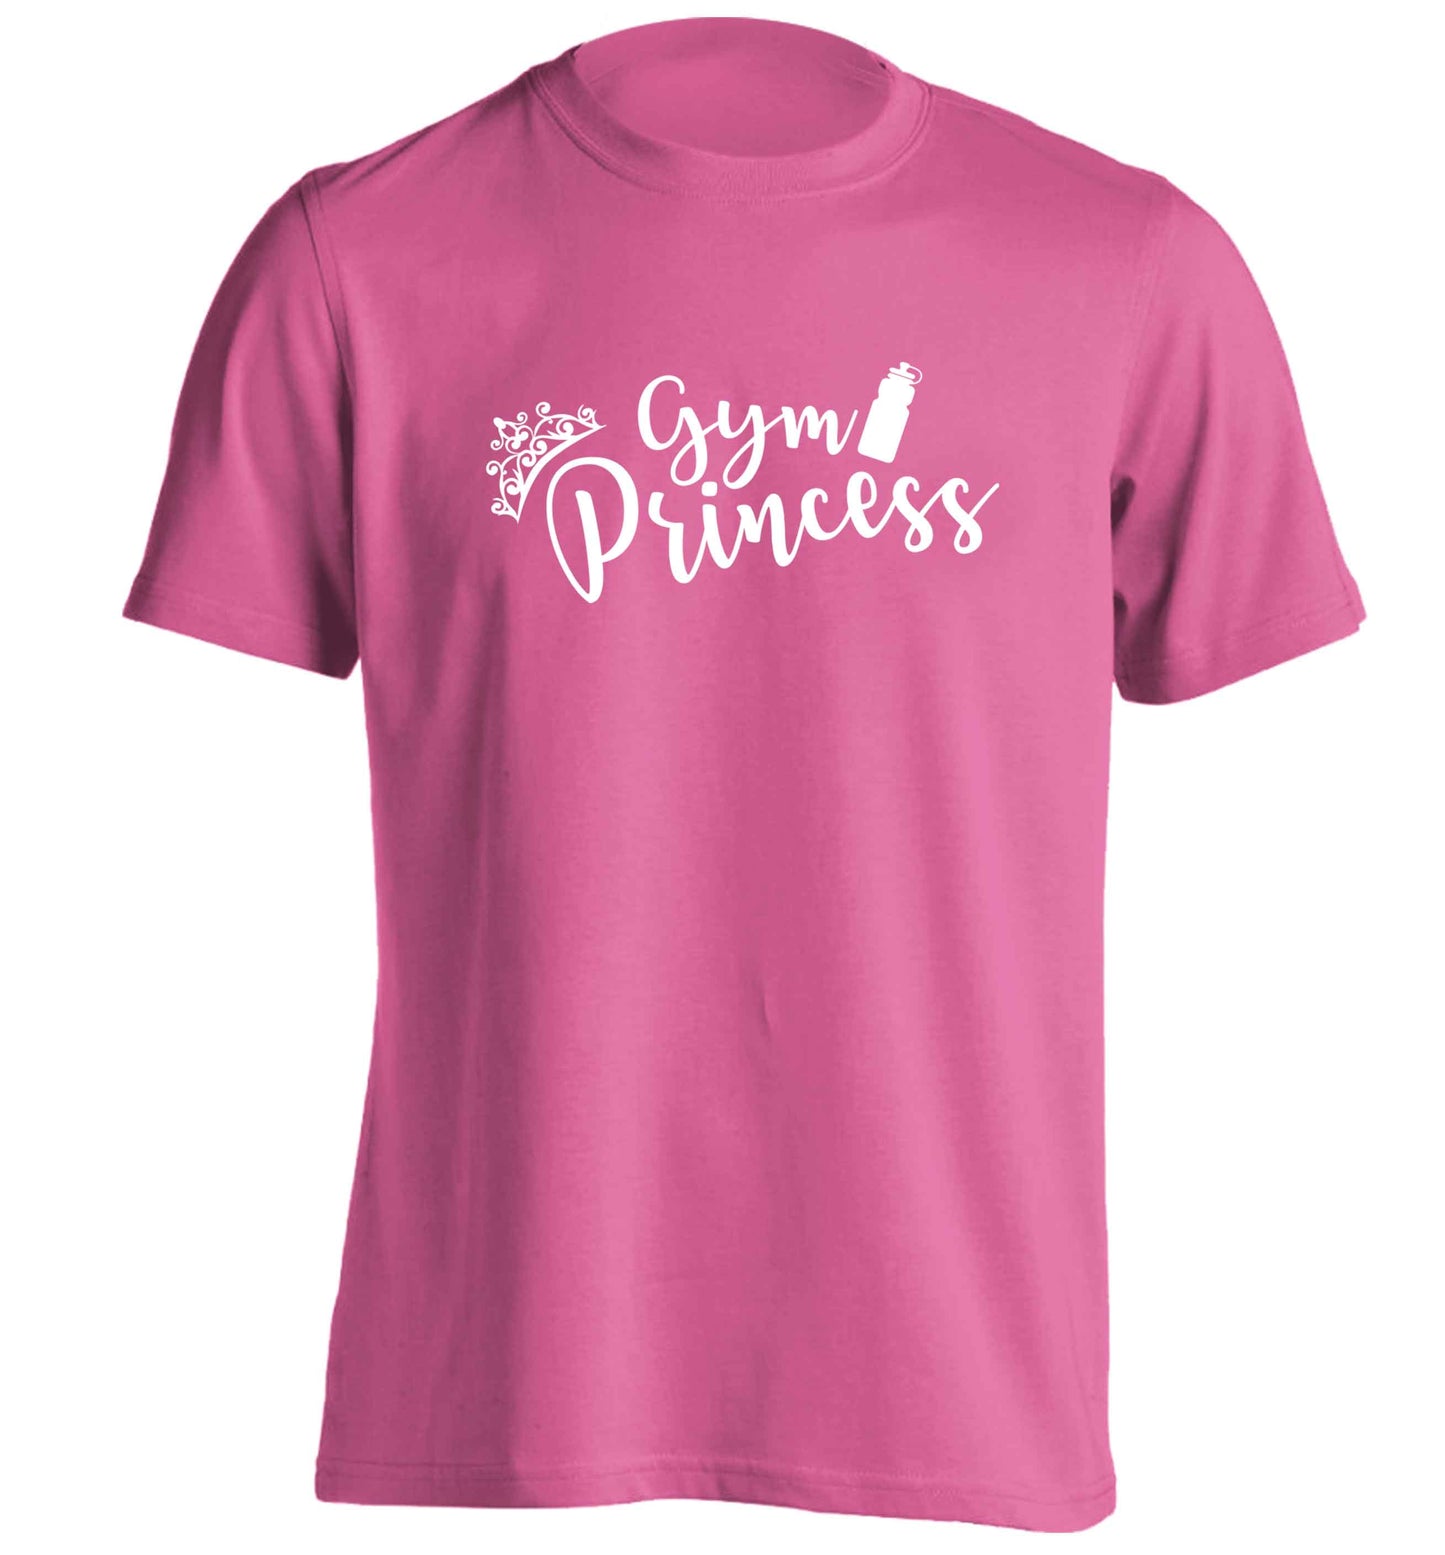 Gym princess adults unisex pink Tshirt 2XL